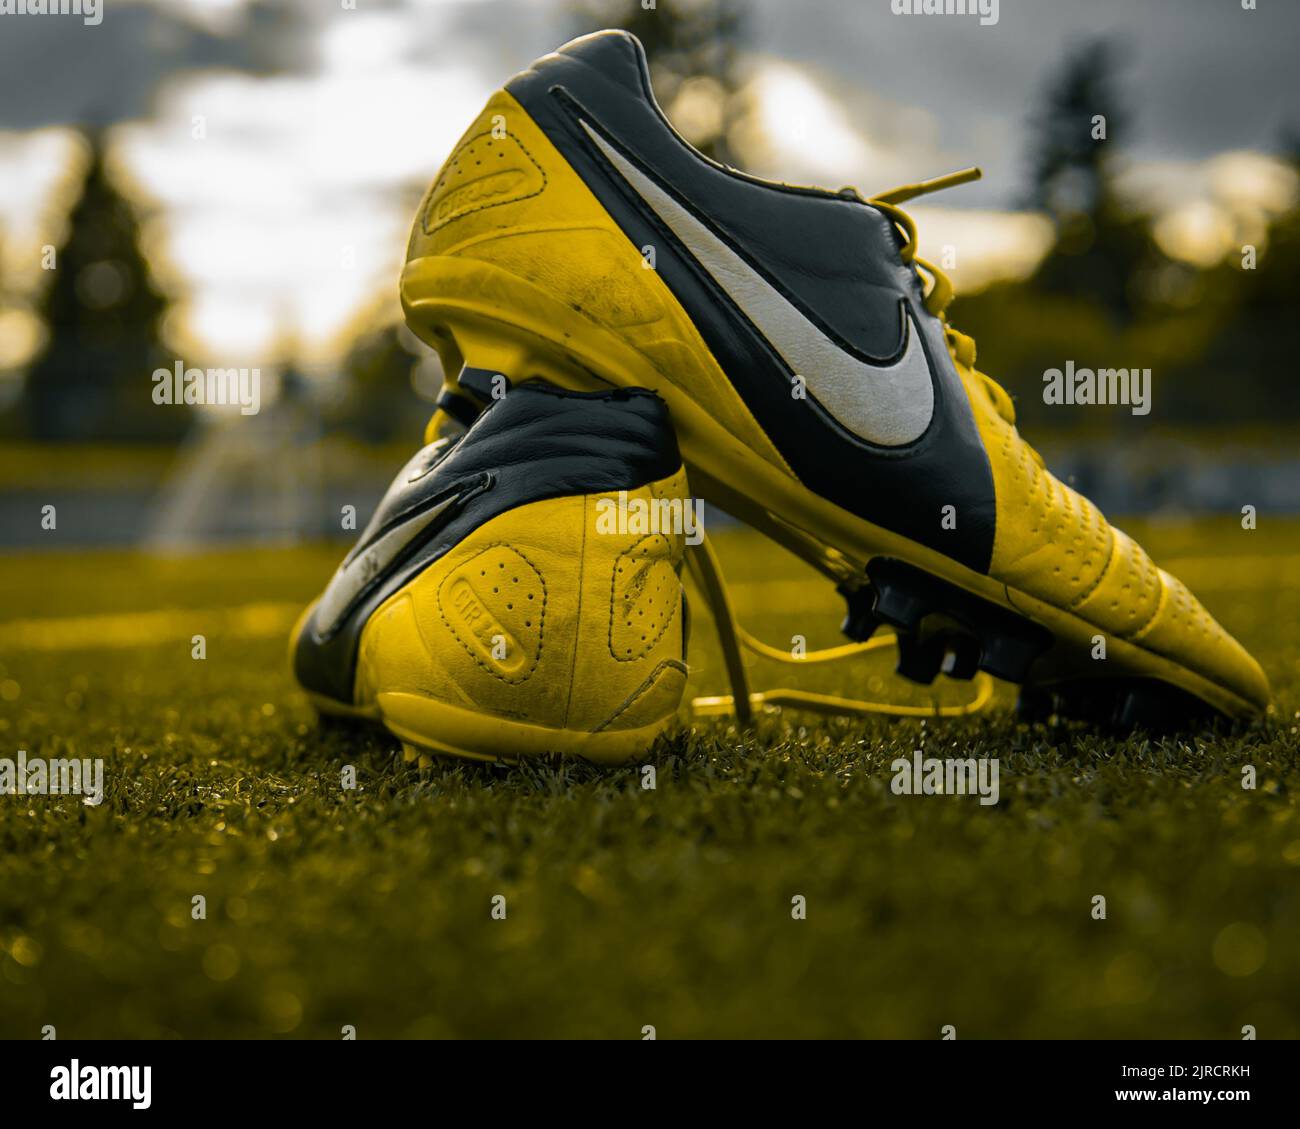 Zapatos nike amarillos fotografías e imágenes de alta resolución - Alamy